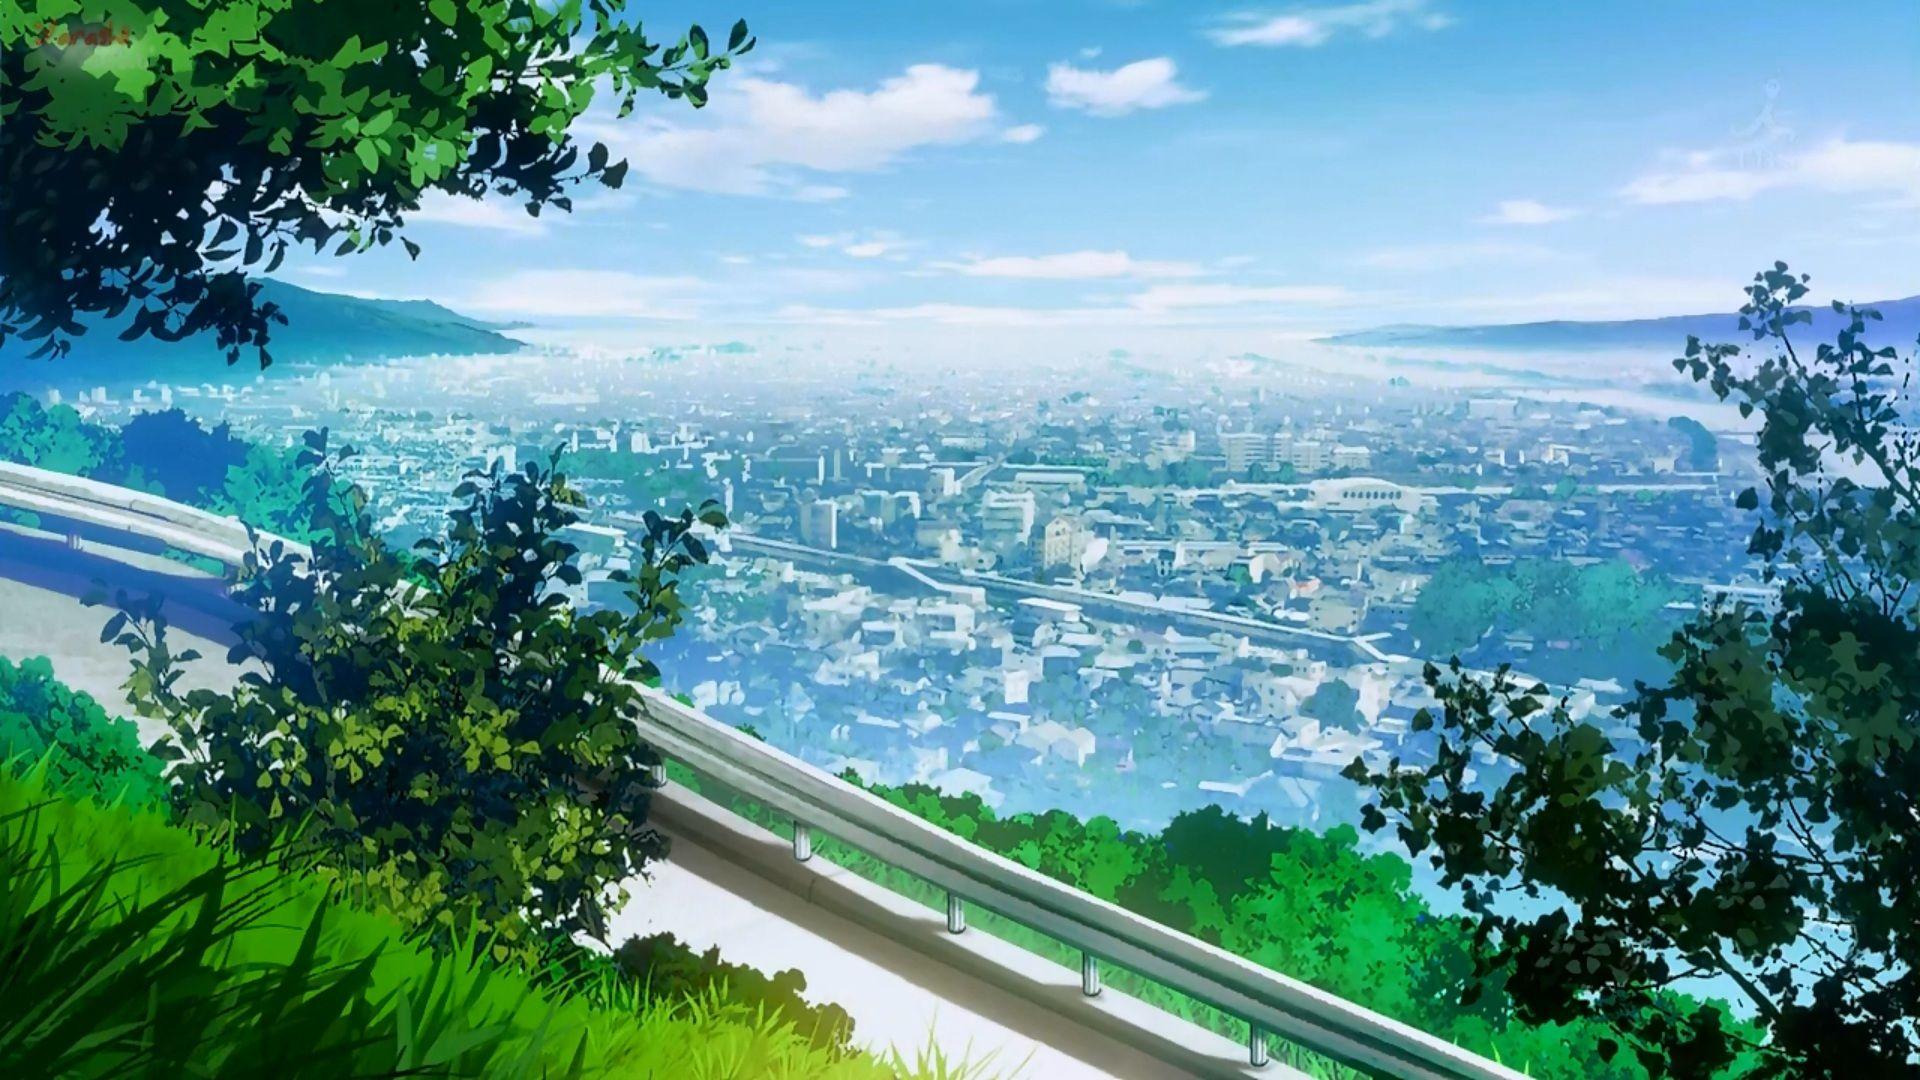 Beautiful Anime Scenery - Anime Scenery Wallpapers | wallpaperlist